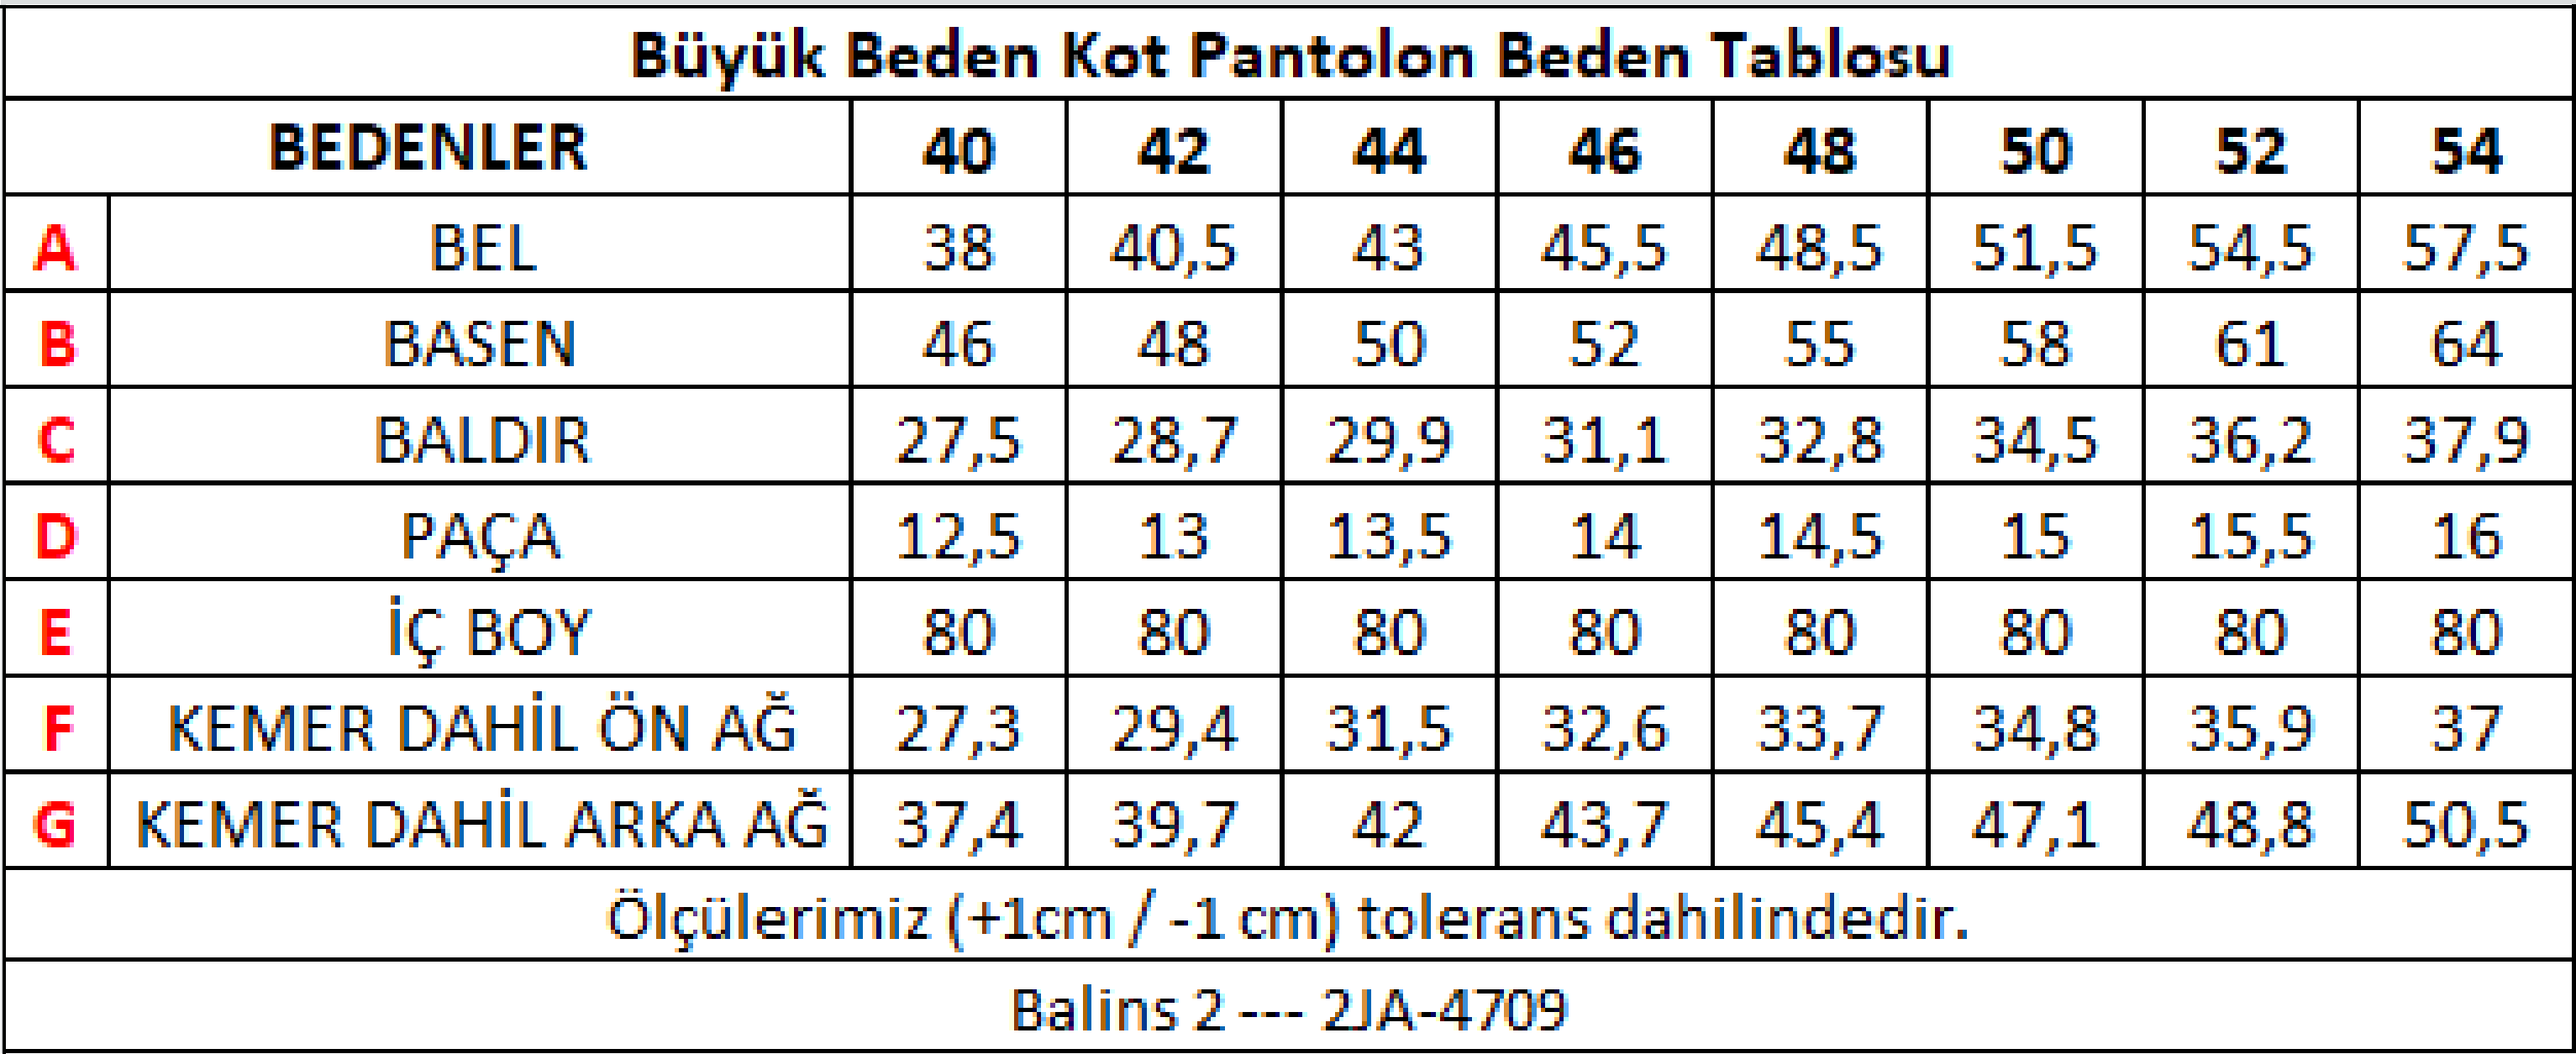 balins-2.png (55 KB)